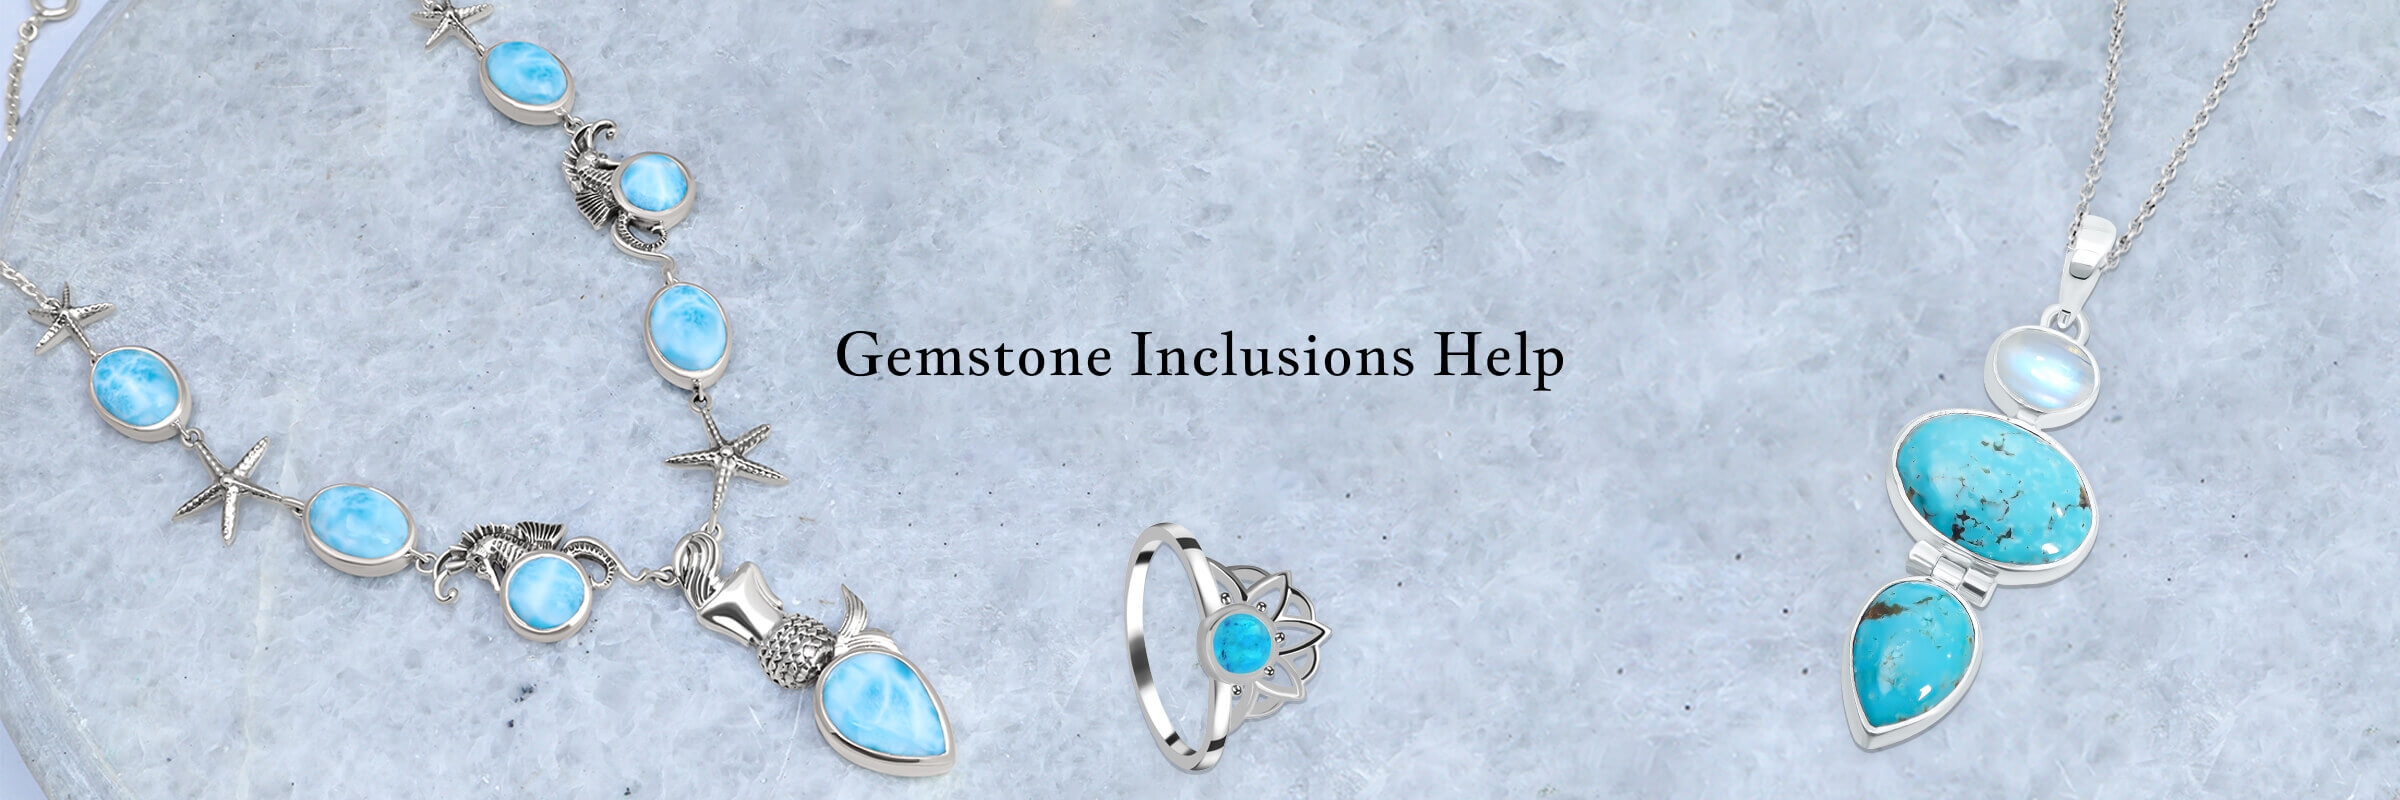 Gemstone Inclusions Help